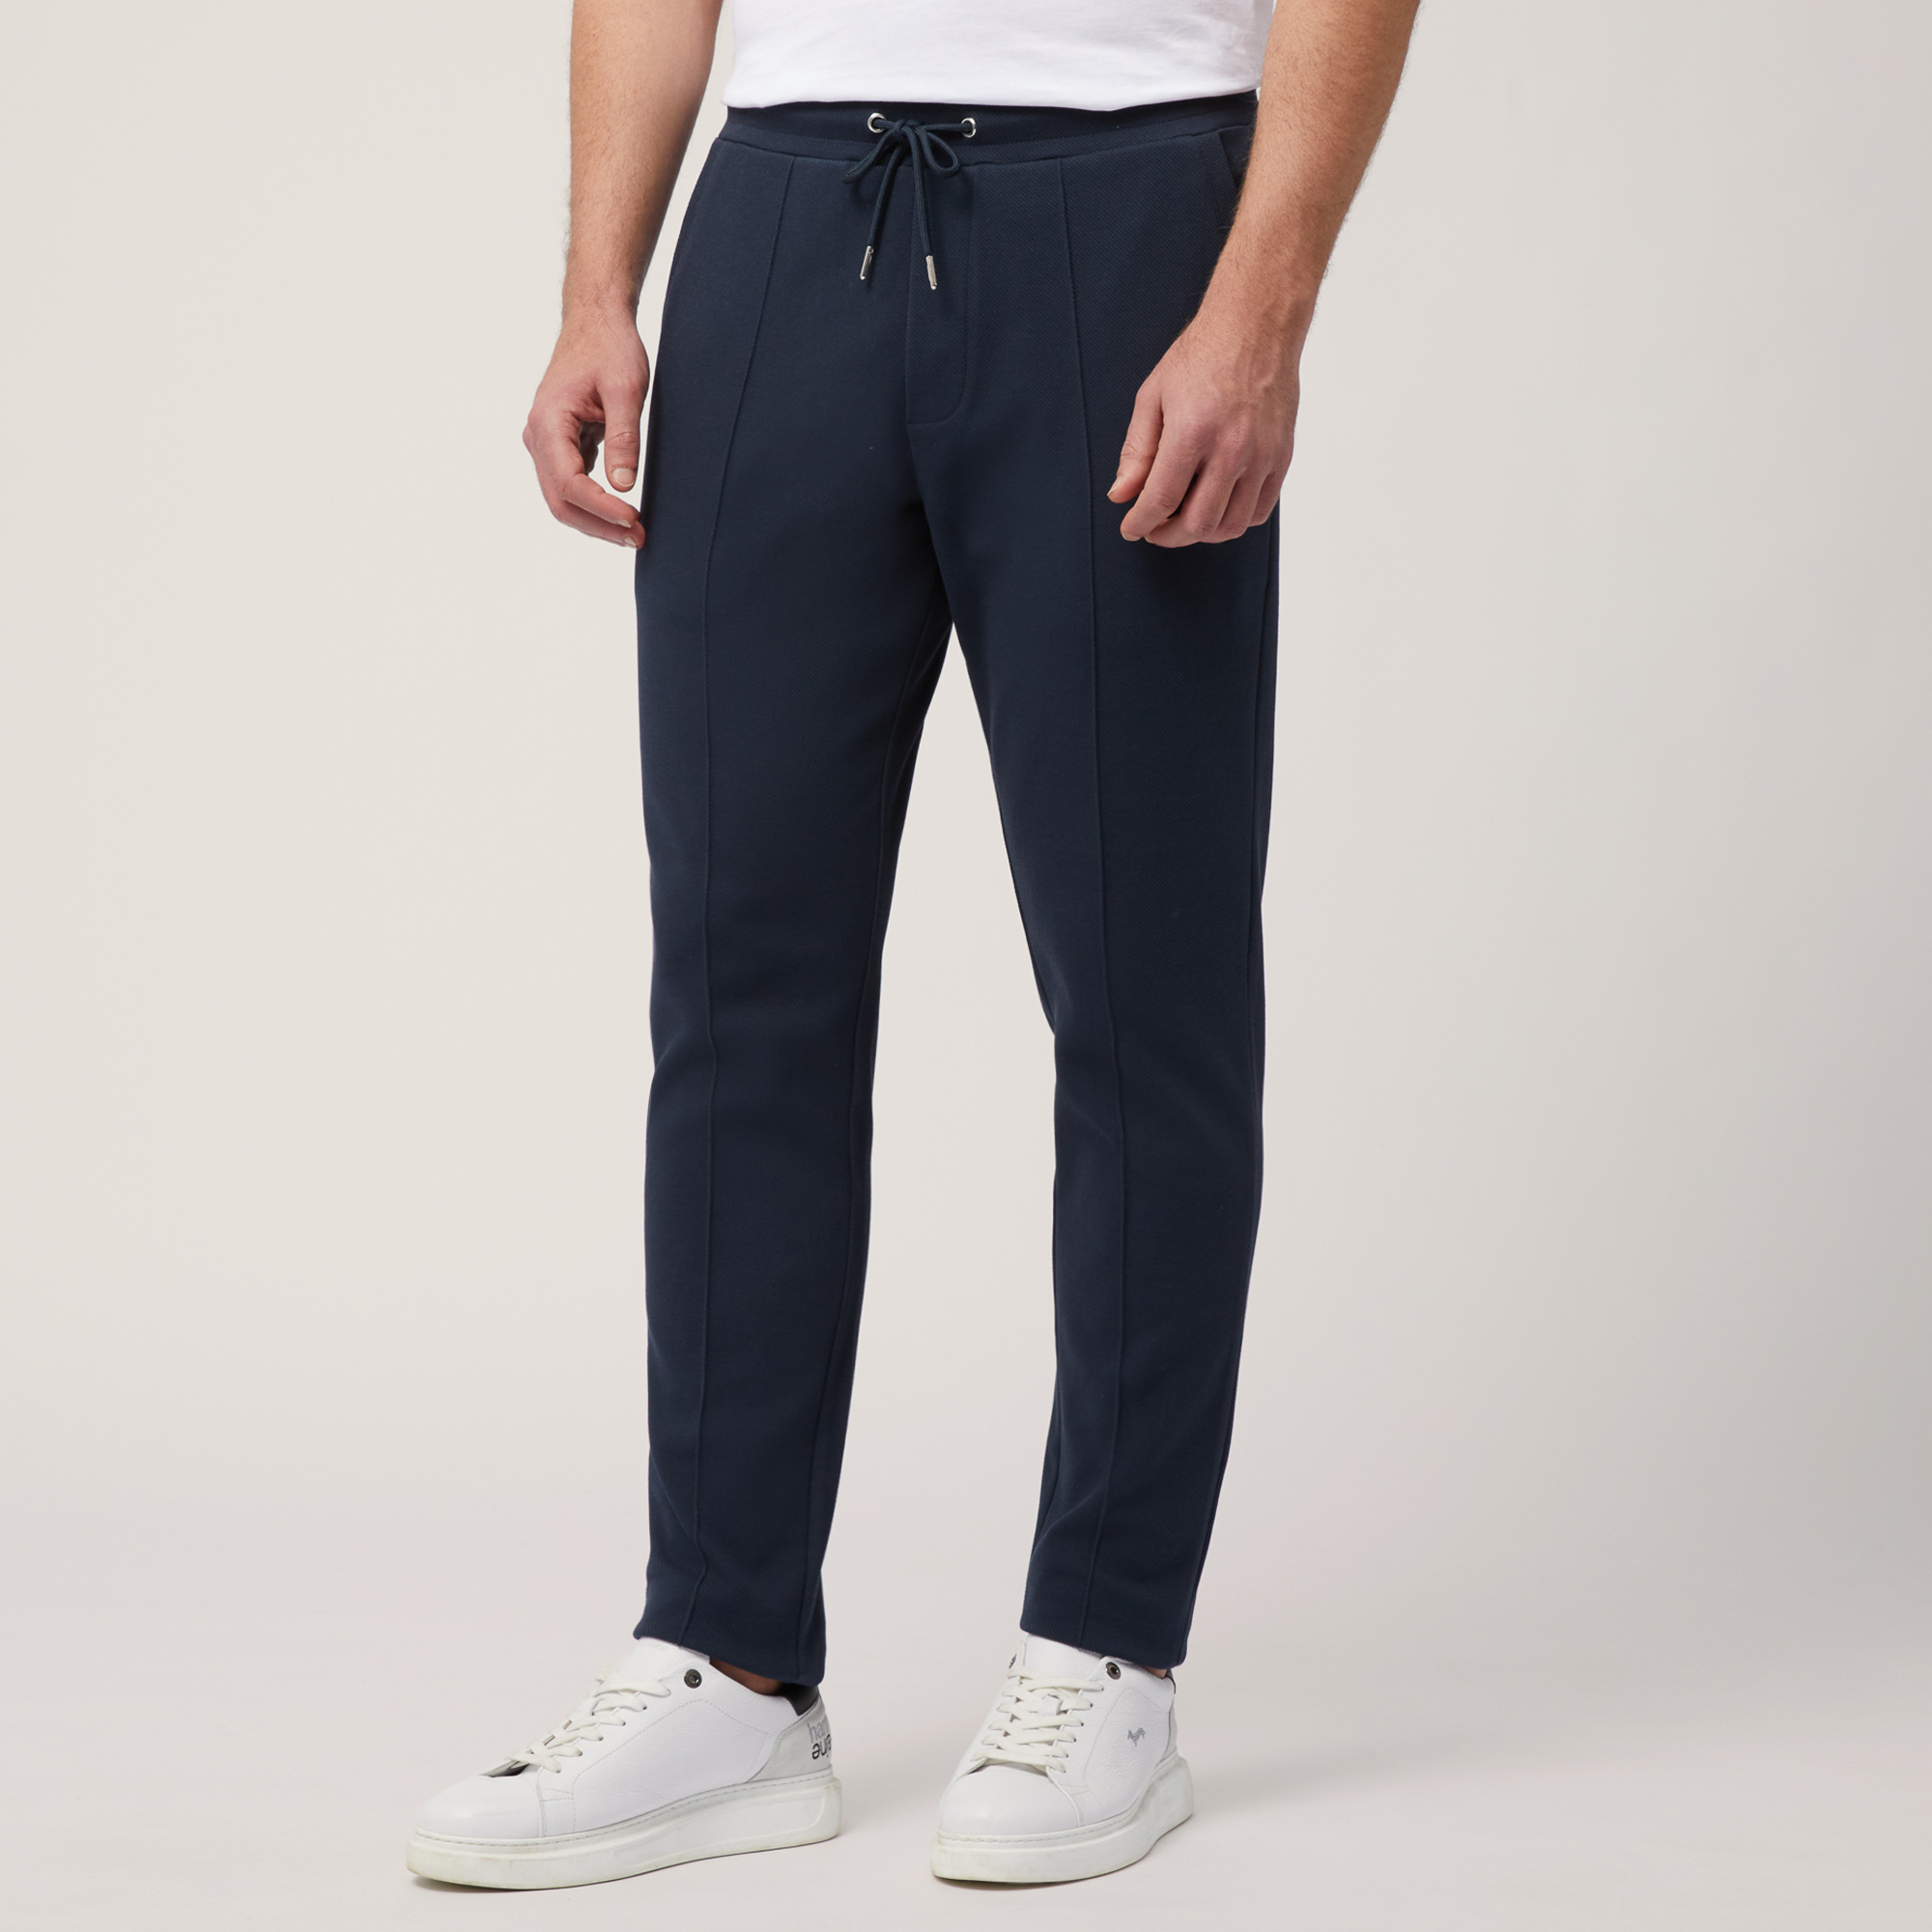 Pantalone In Cotone Stretch Con Tasca Posteriore, Blu Navy, large